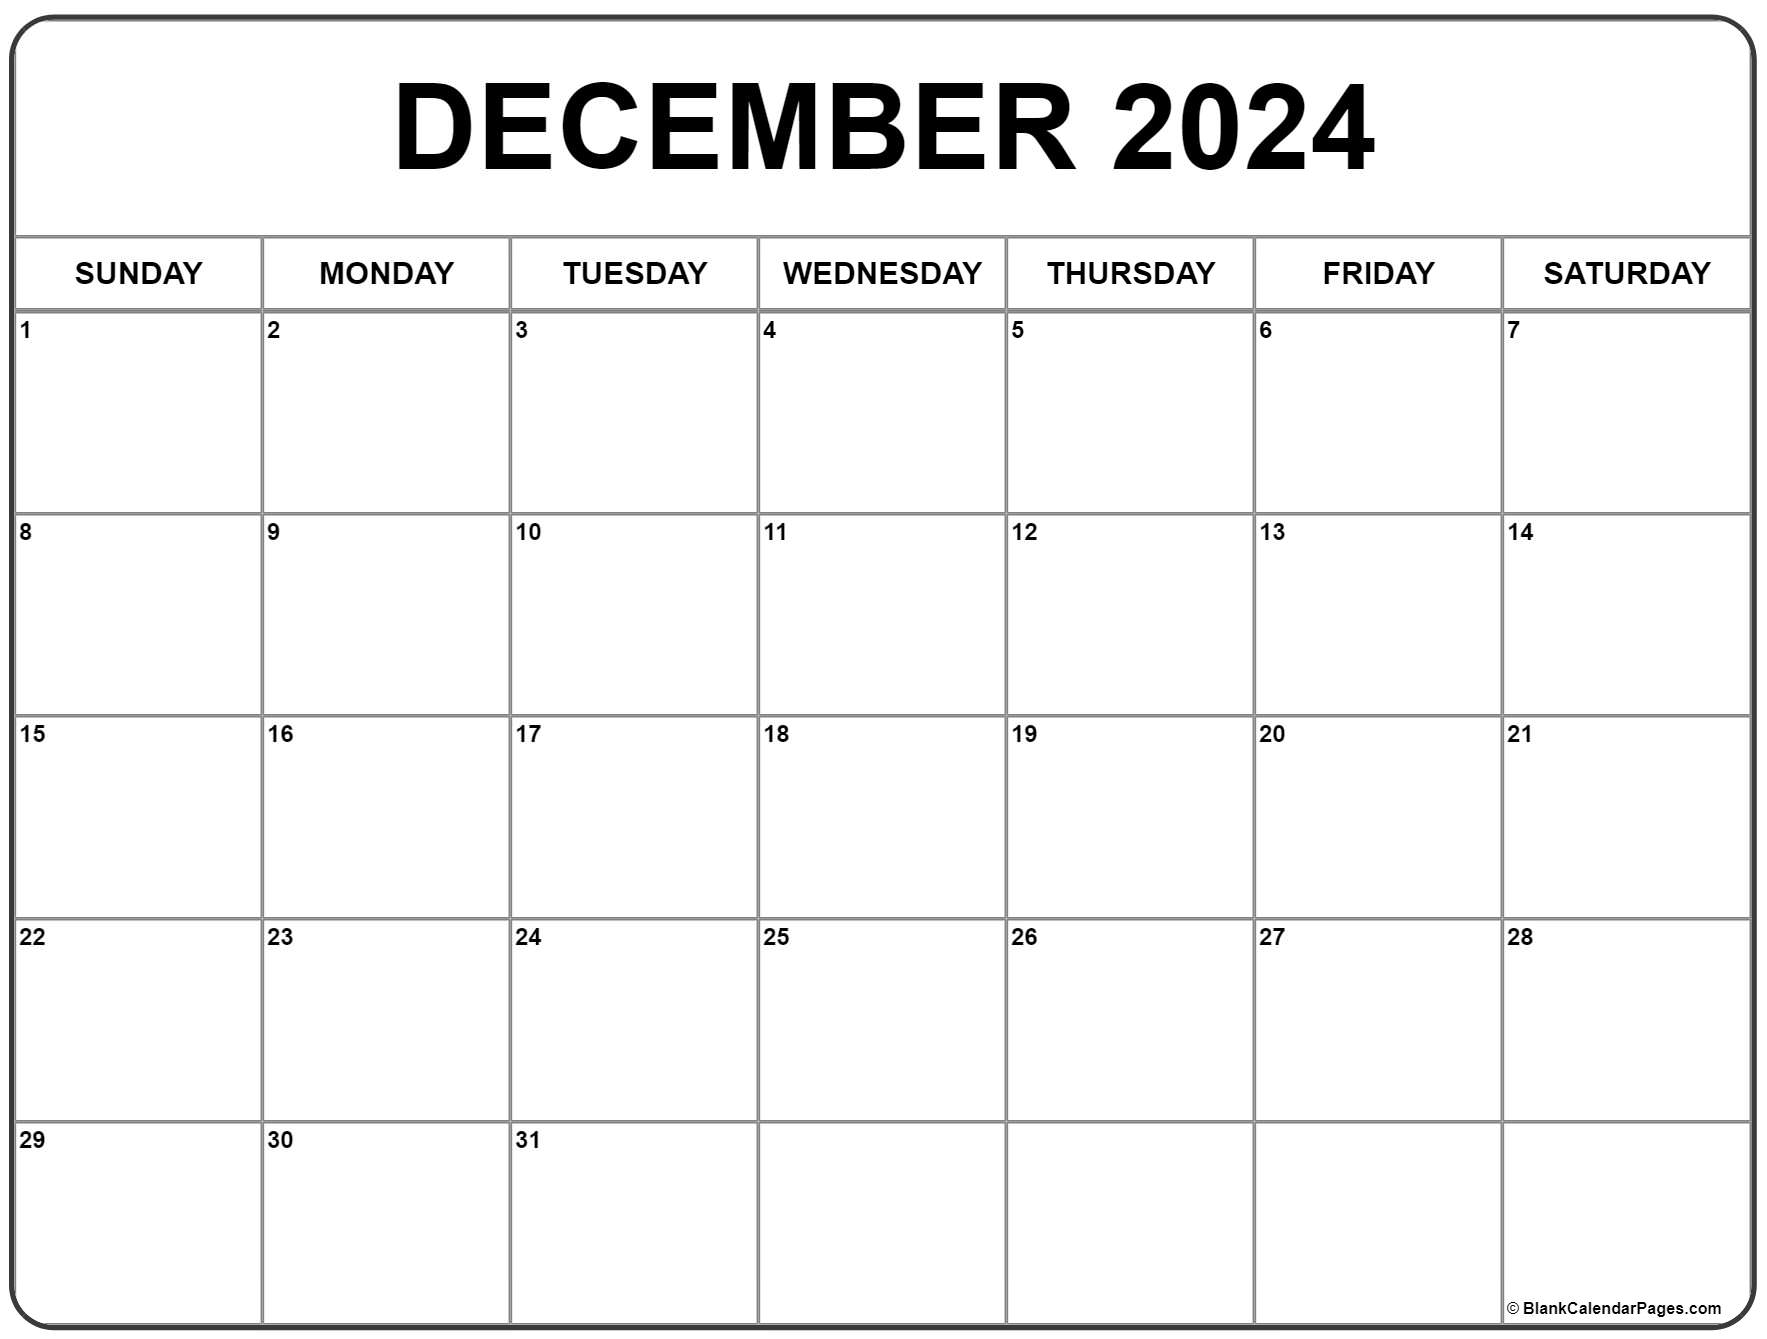 Print Calendar December 2022 December 2022 Calendar | Free Printable Calendar Templates